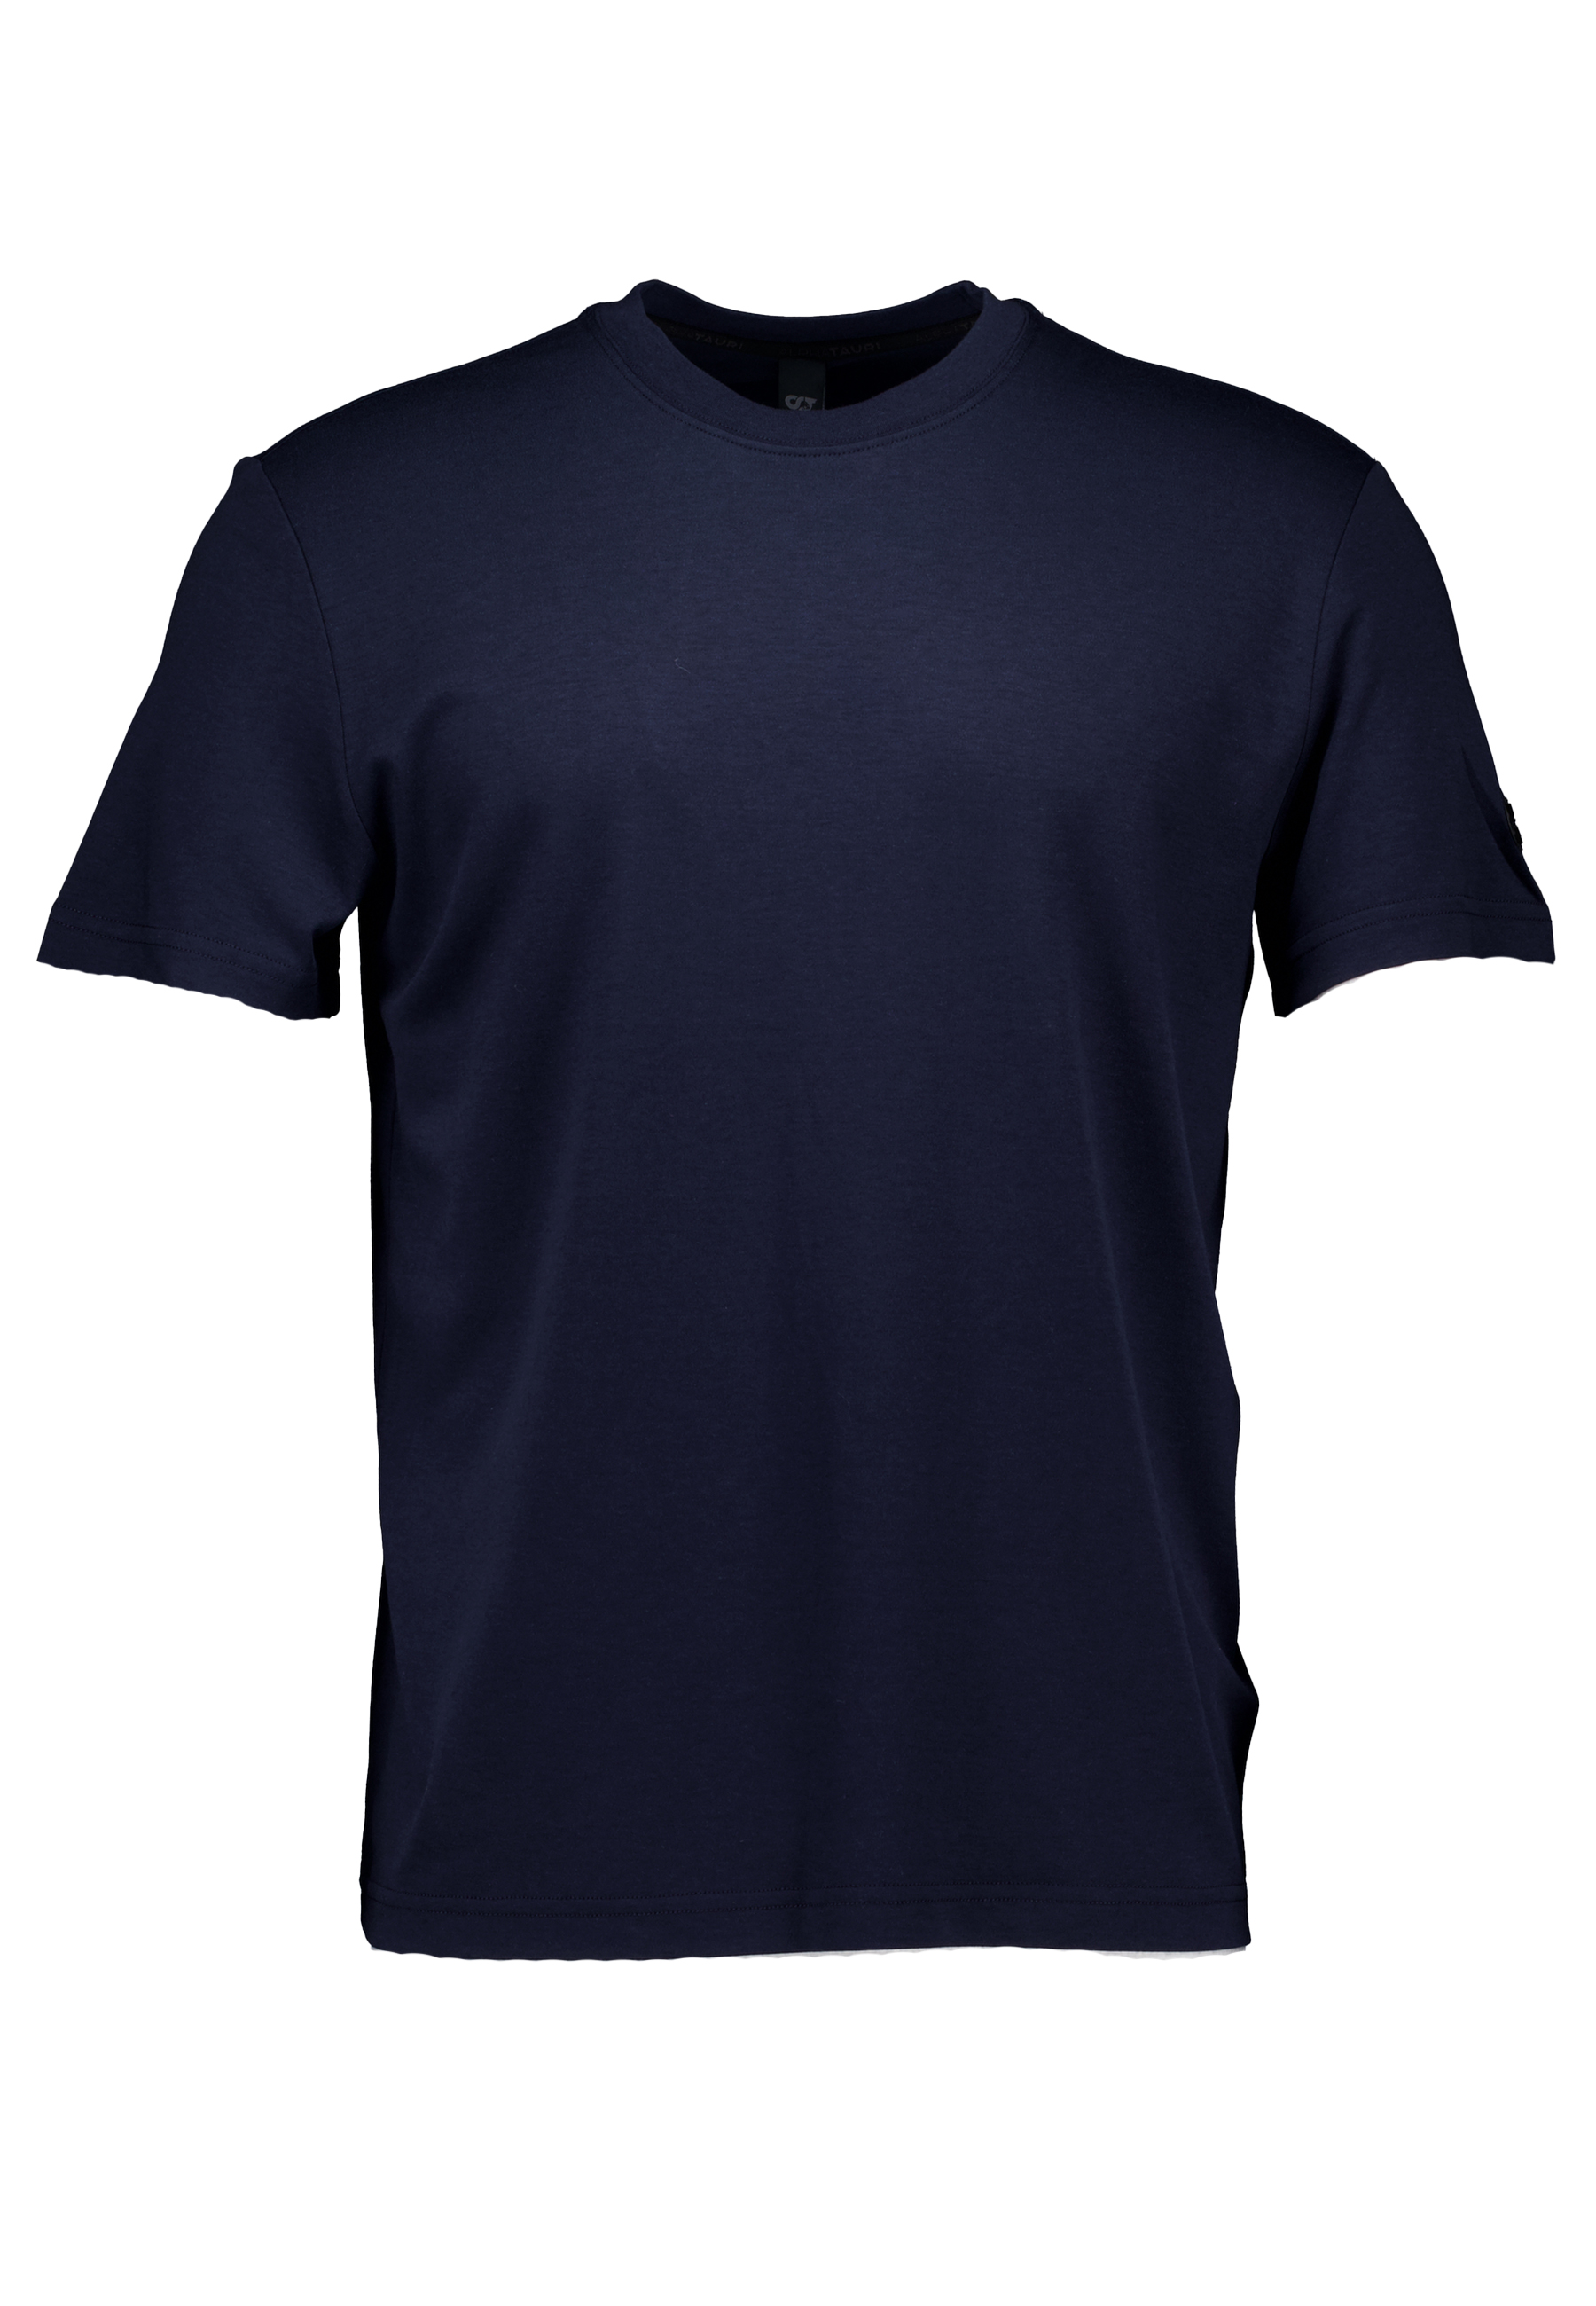 AlphaTauri Shirt Donkerblauw maat XL Ata jopin t-shirts donkerblauw